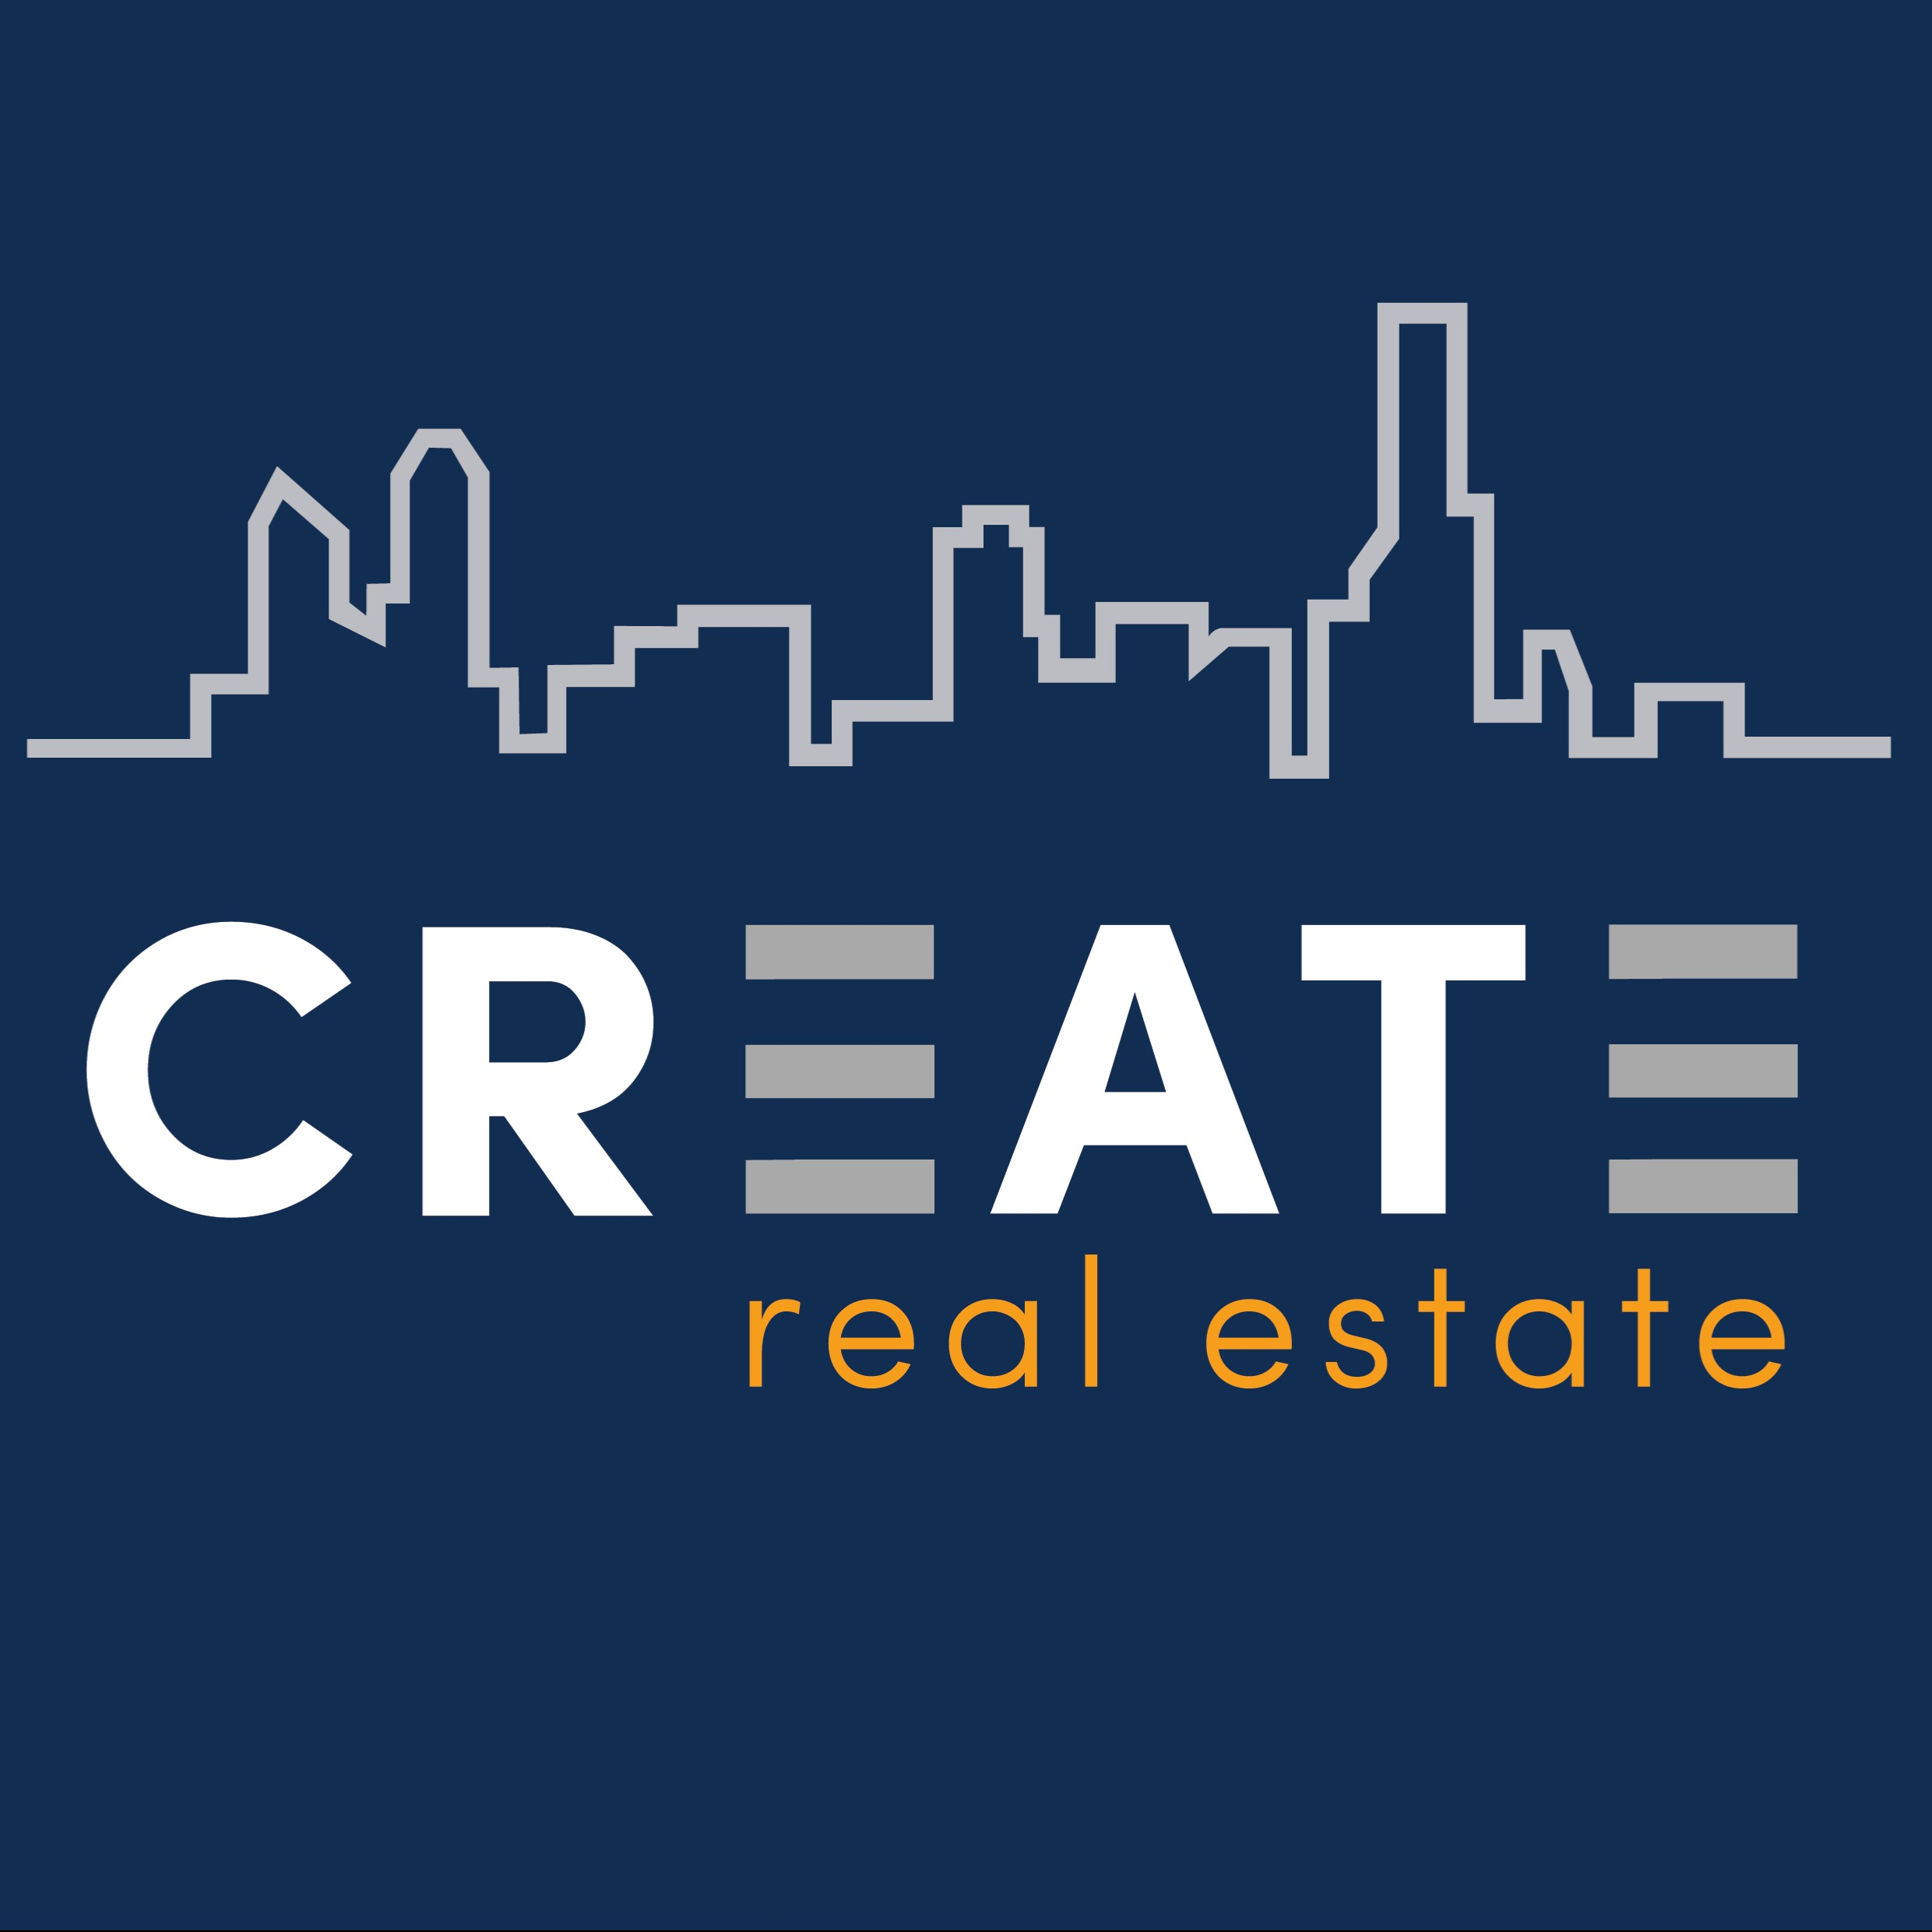 Create Real Estate Logo